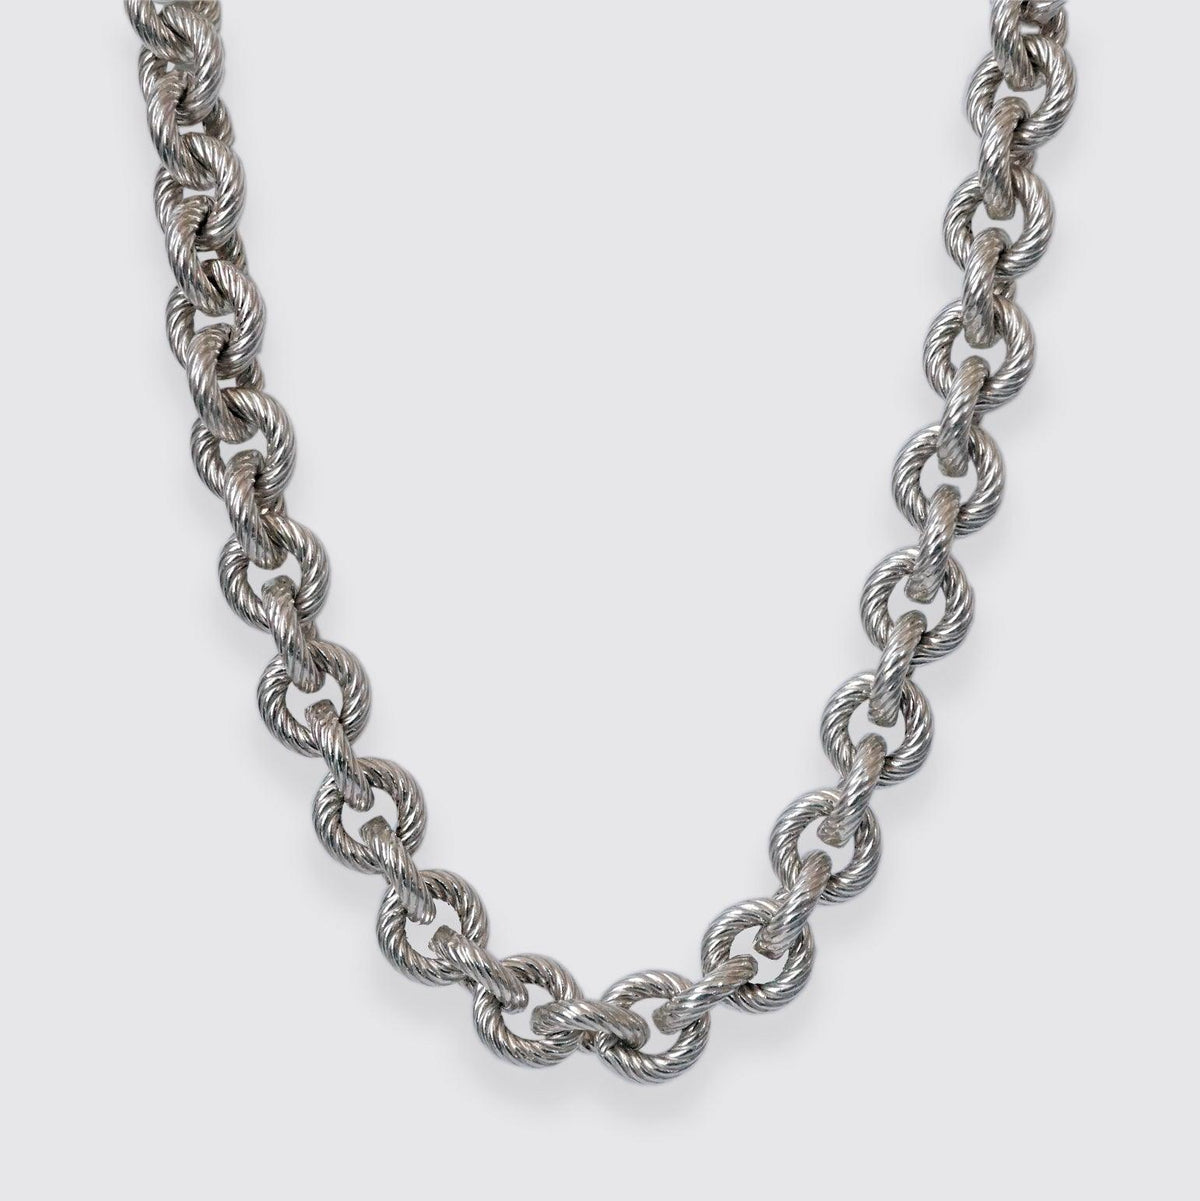 Sailor Cable Twist Chain Necklace, 6.8mm